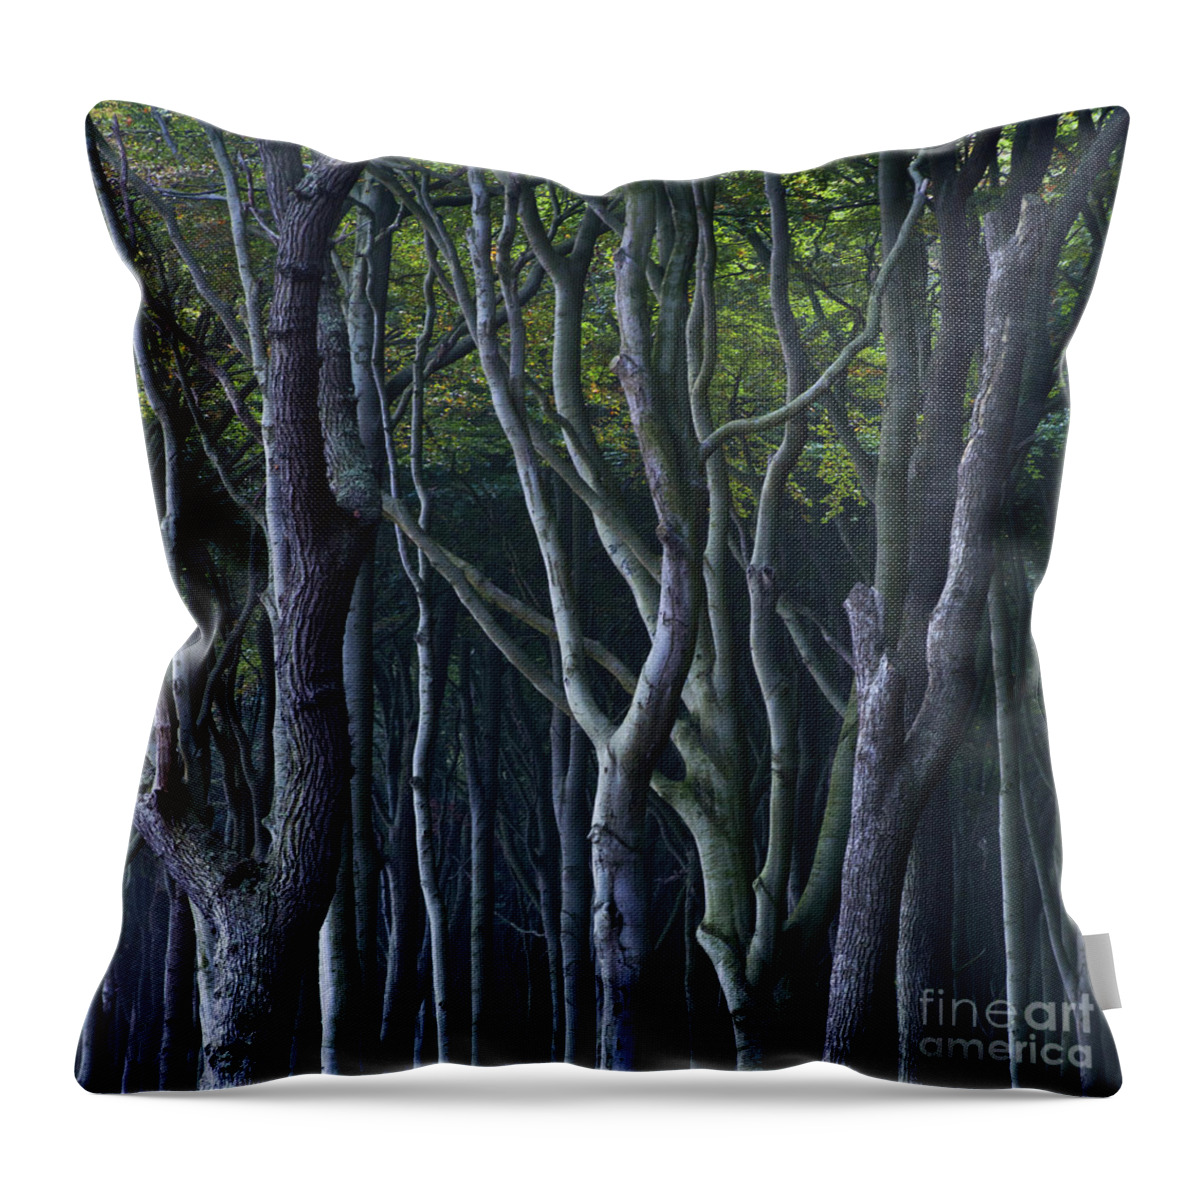 Beech Tree Throw Pillow featuring the photograph Green Glow by Heiko Koehrer-Wagner